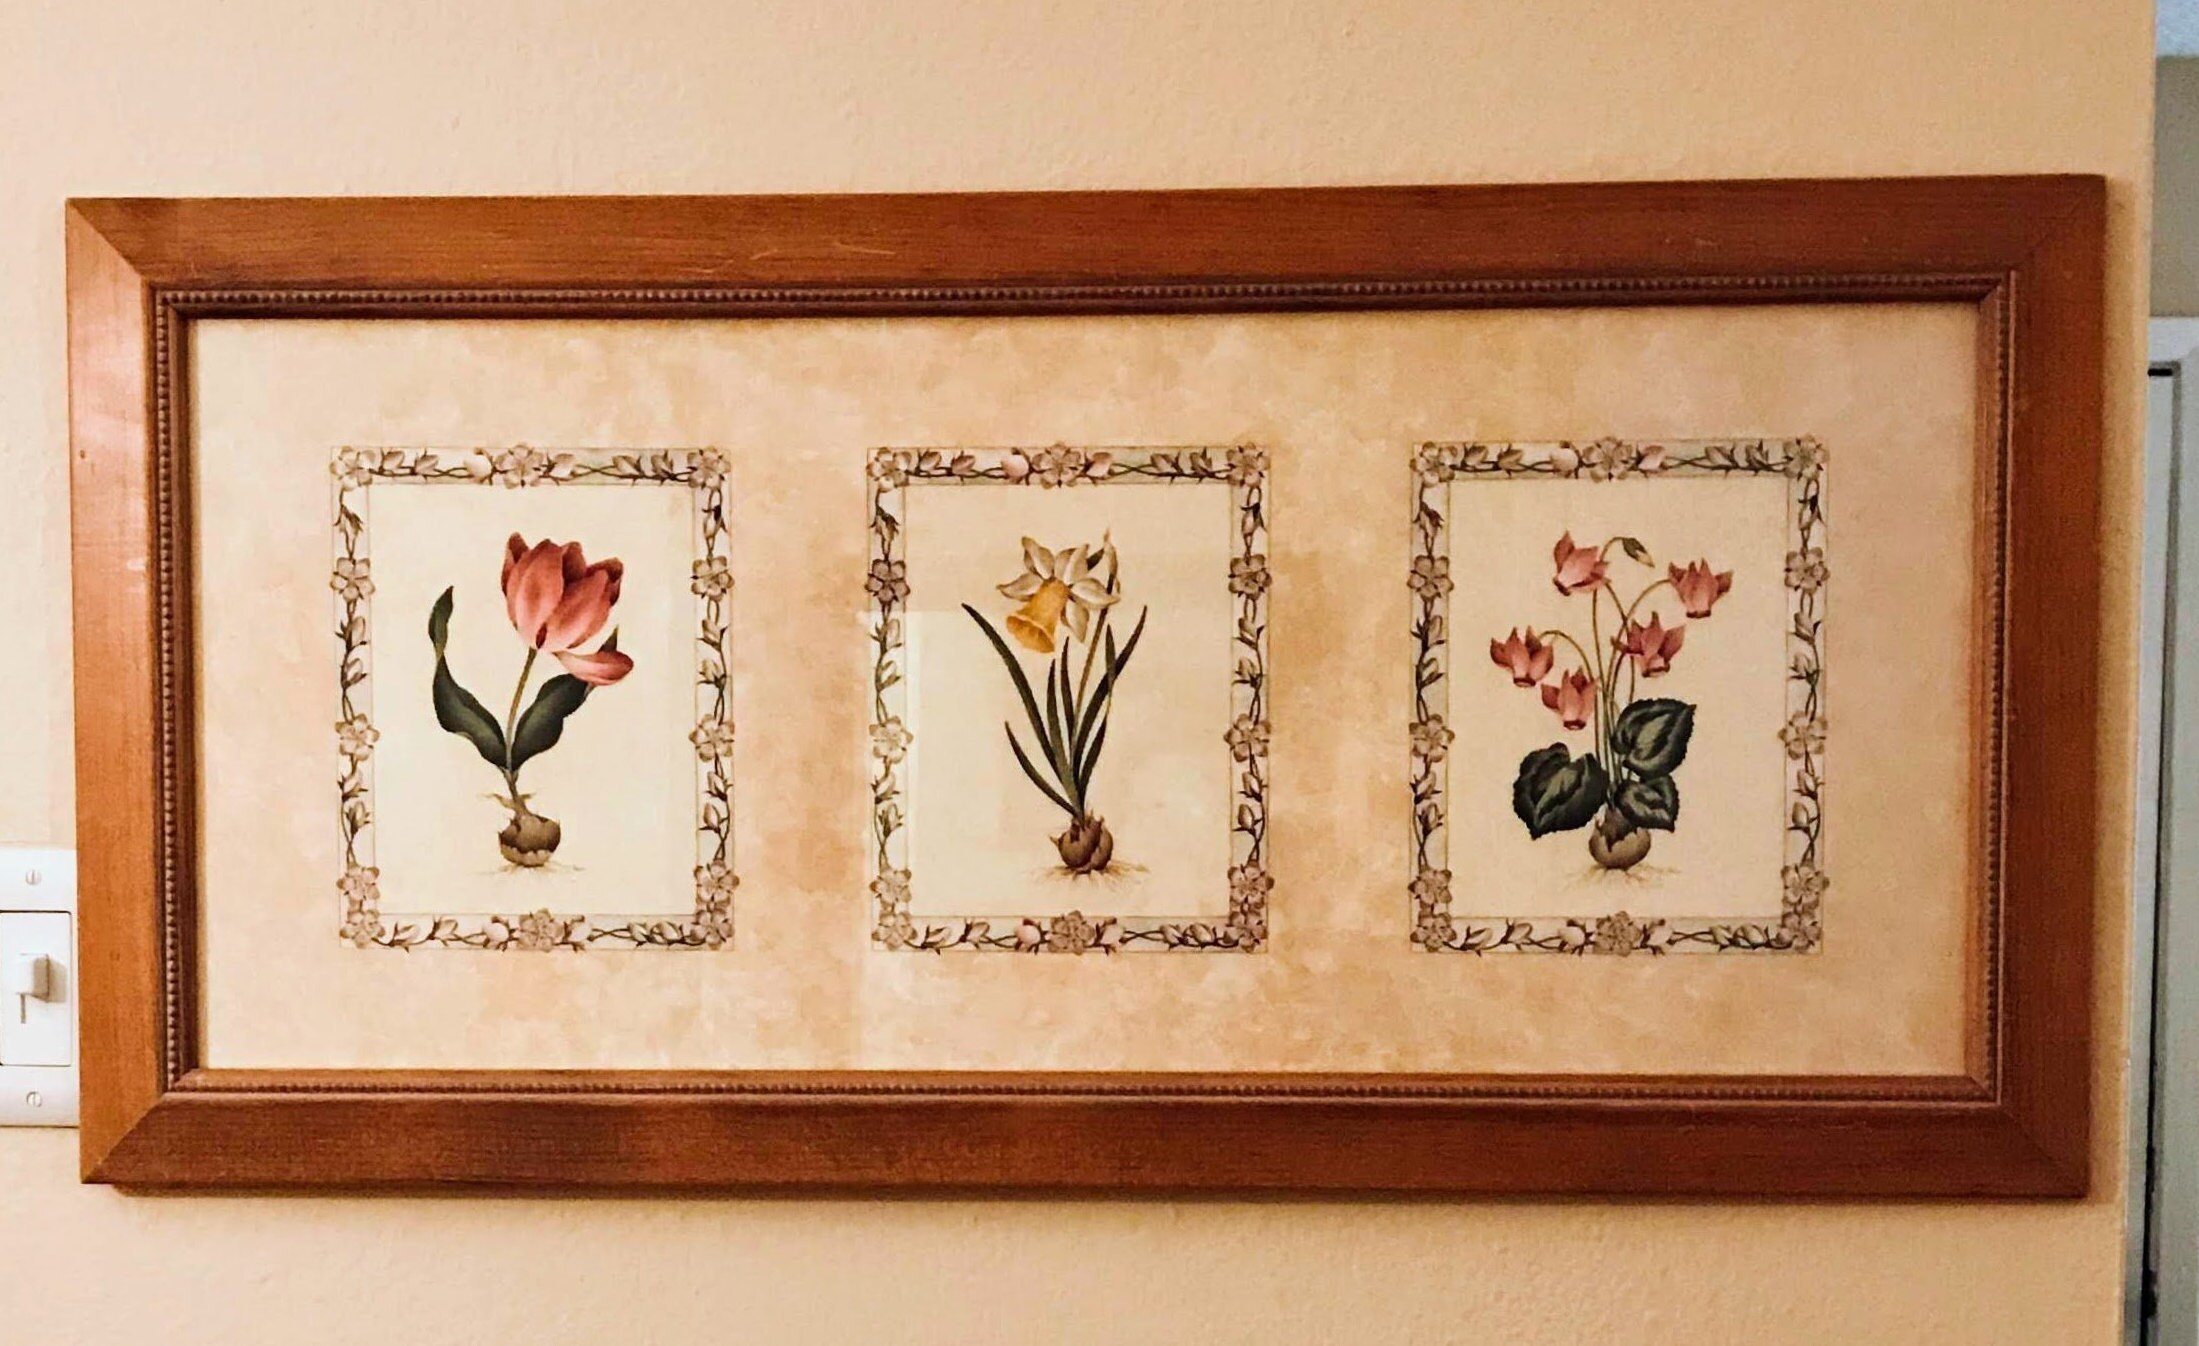 circa 1990 Large Wall Art/Floral Print/Hanging in Wood Frame Depicting Three Individual Flower Varieties